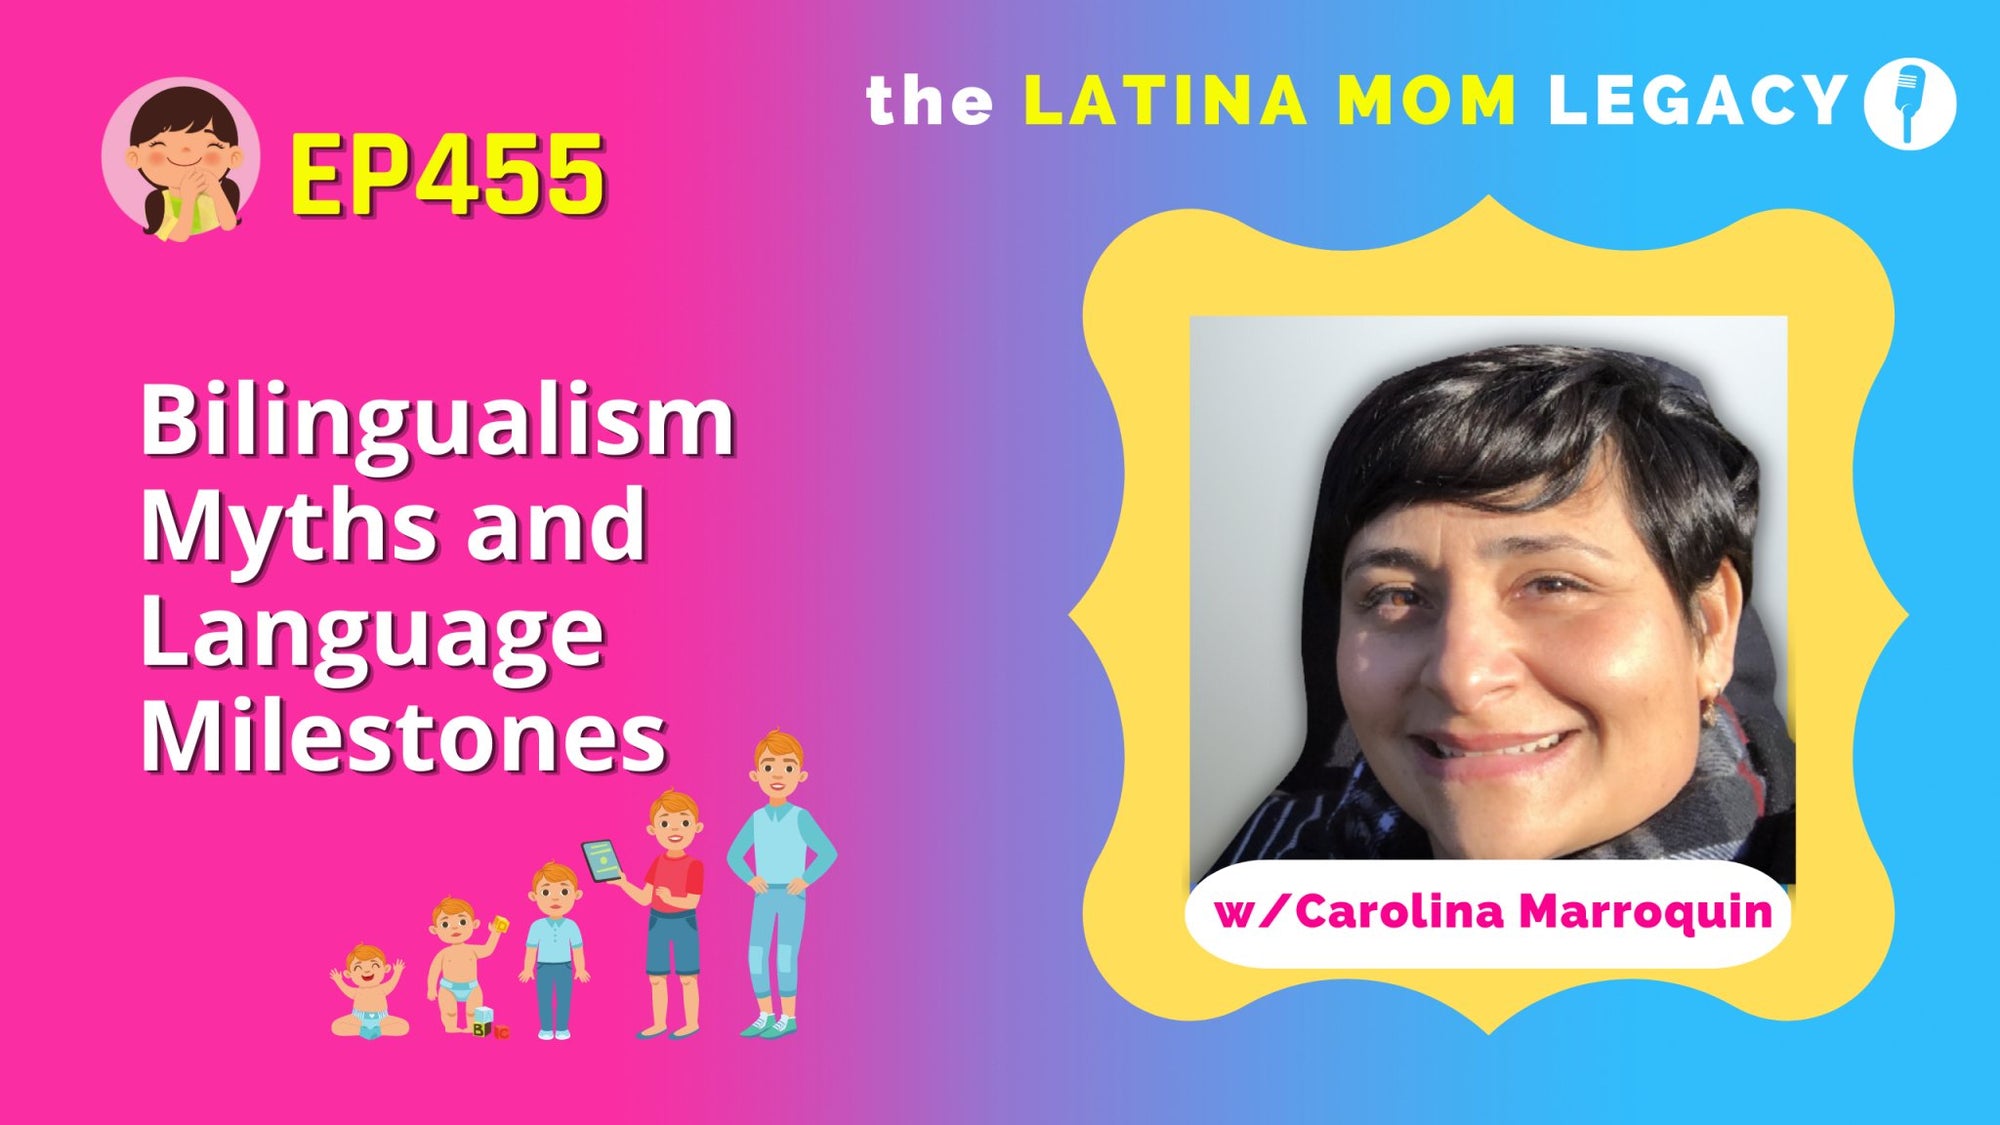 EP455 SLP Carolina Marroquin - Bilingualism Myths and Language Milestones in Children - Mi LegaSi